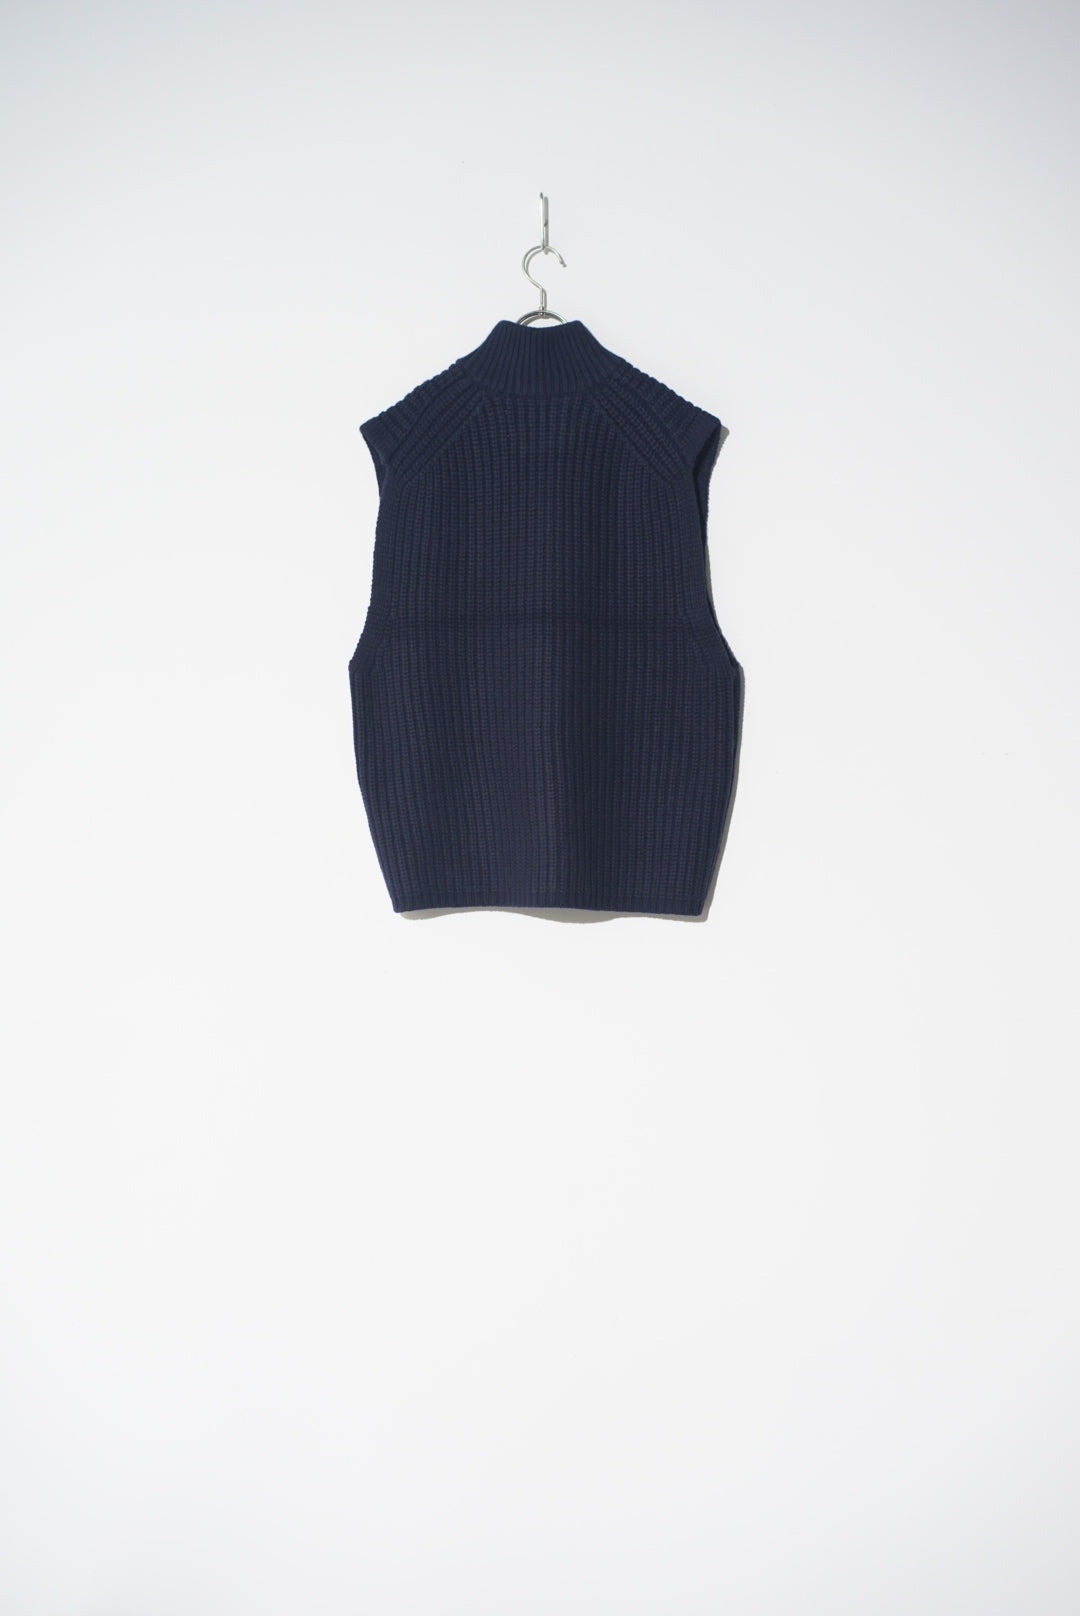 wn23-15fw179-kw / Basolan cashmere wool Futoune zip up vest